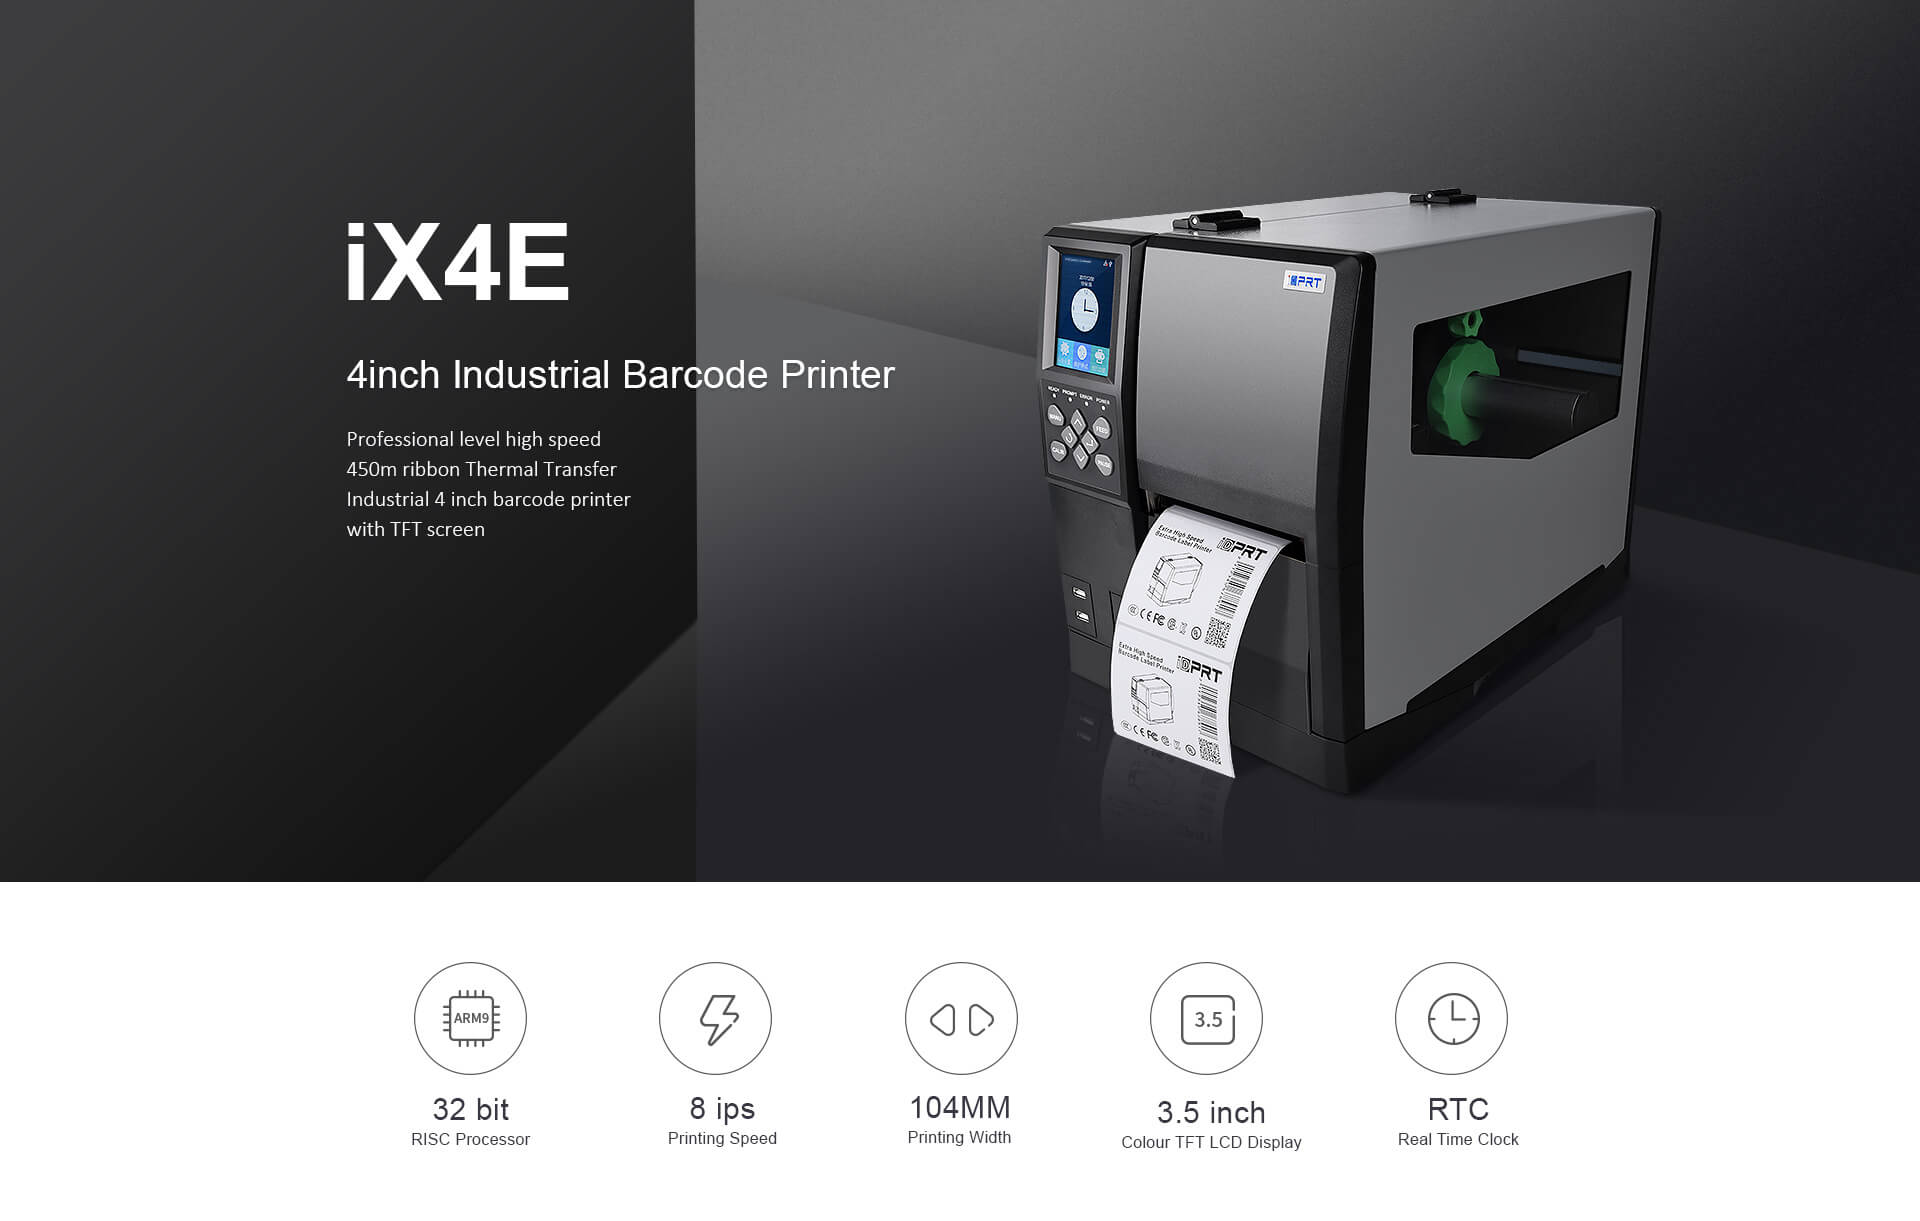 Printronix Auto ID T6204 Thermal Transfer Printer (4 wide, 203dpi)